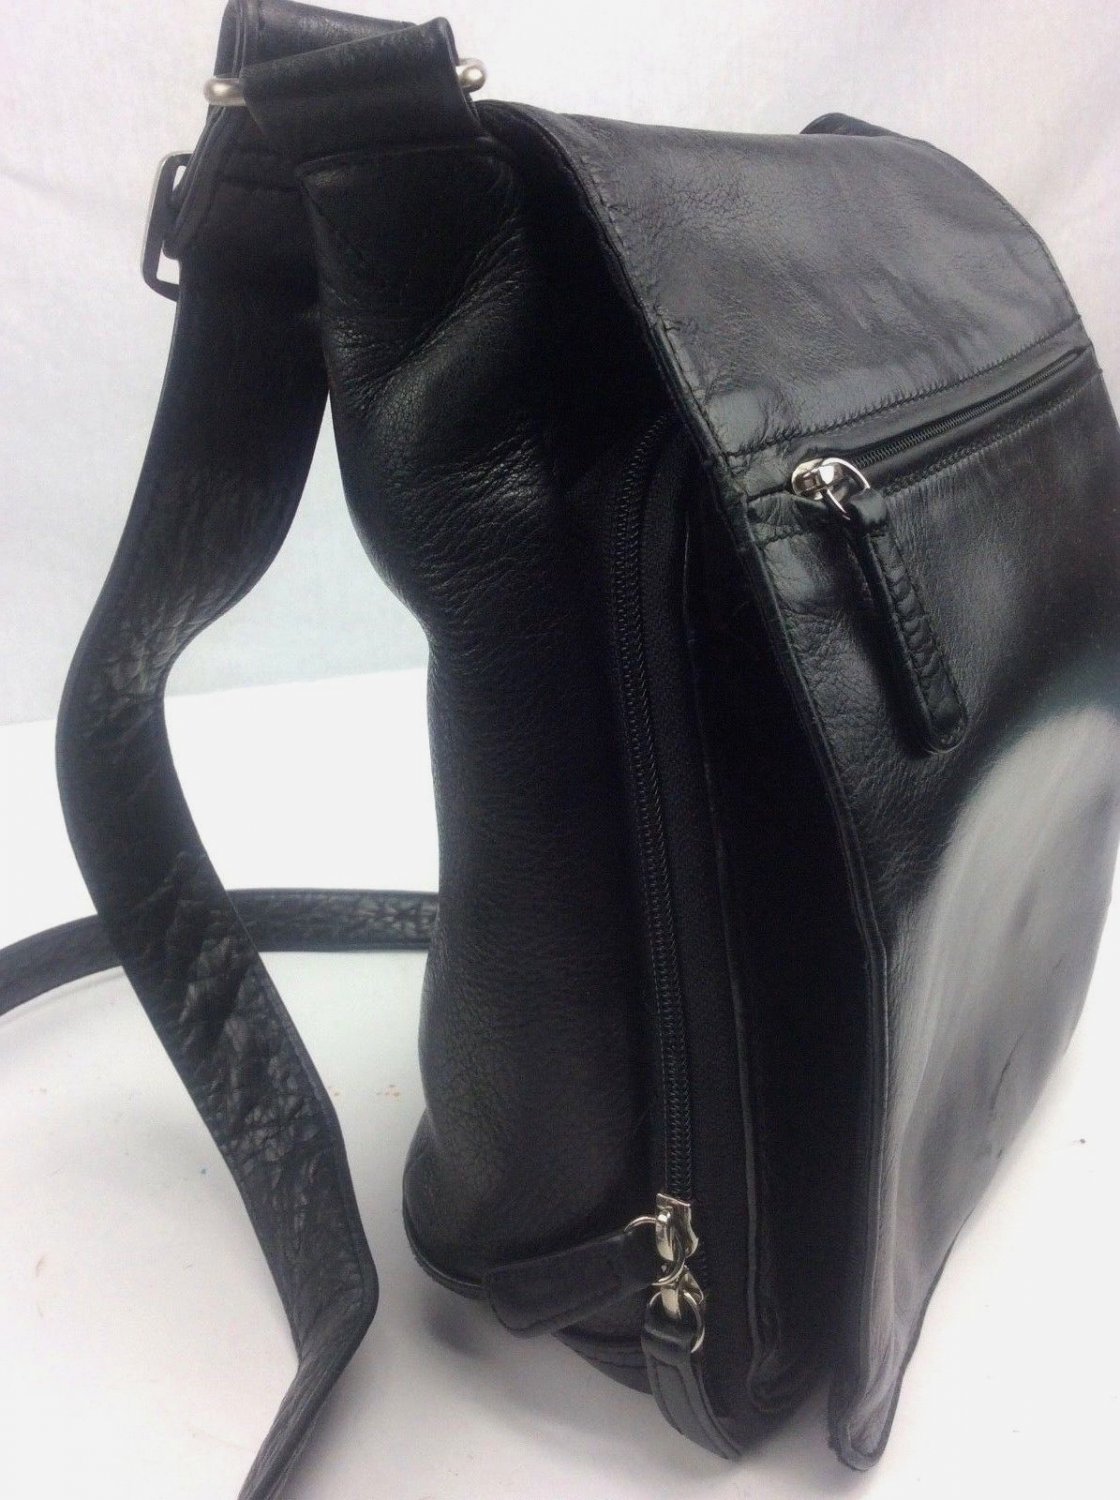 Mori Luggage Cross Body Black Leather Slim Travel Purse